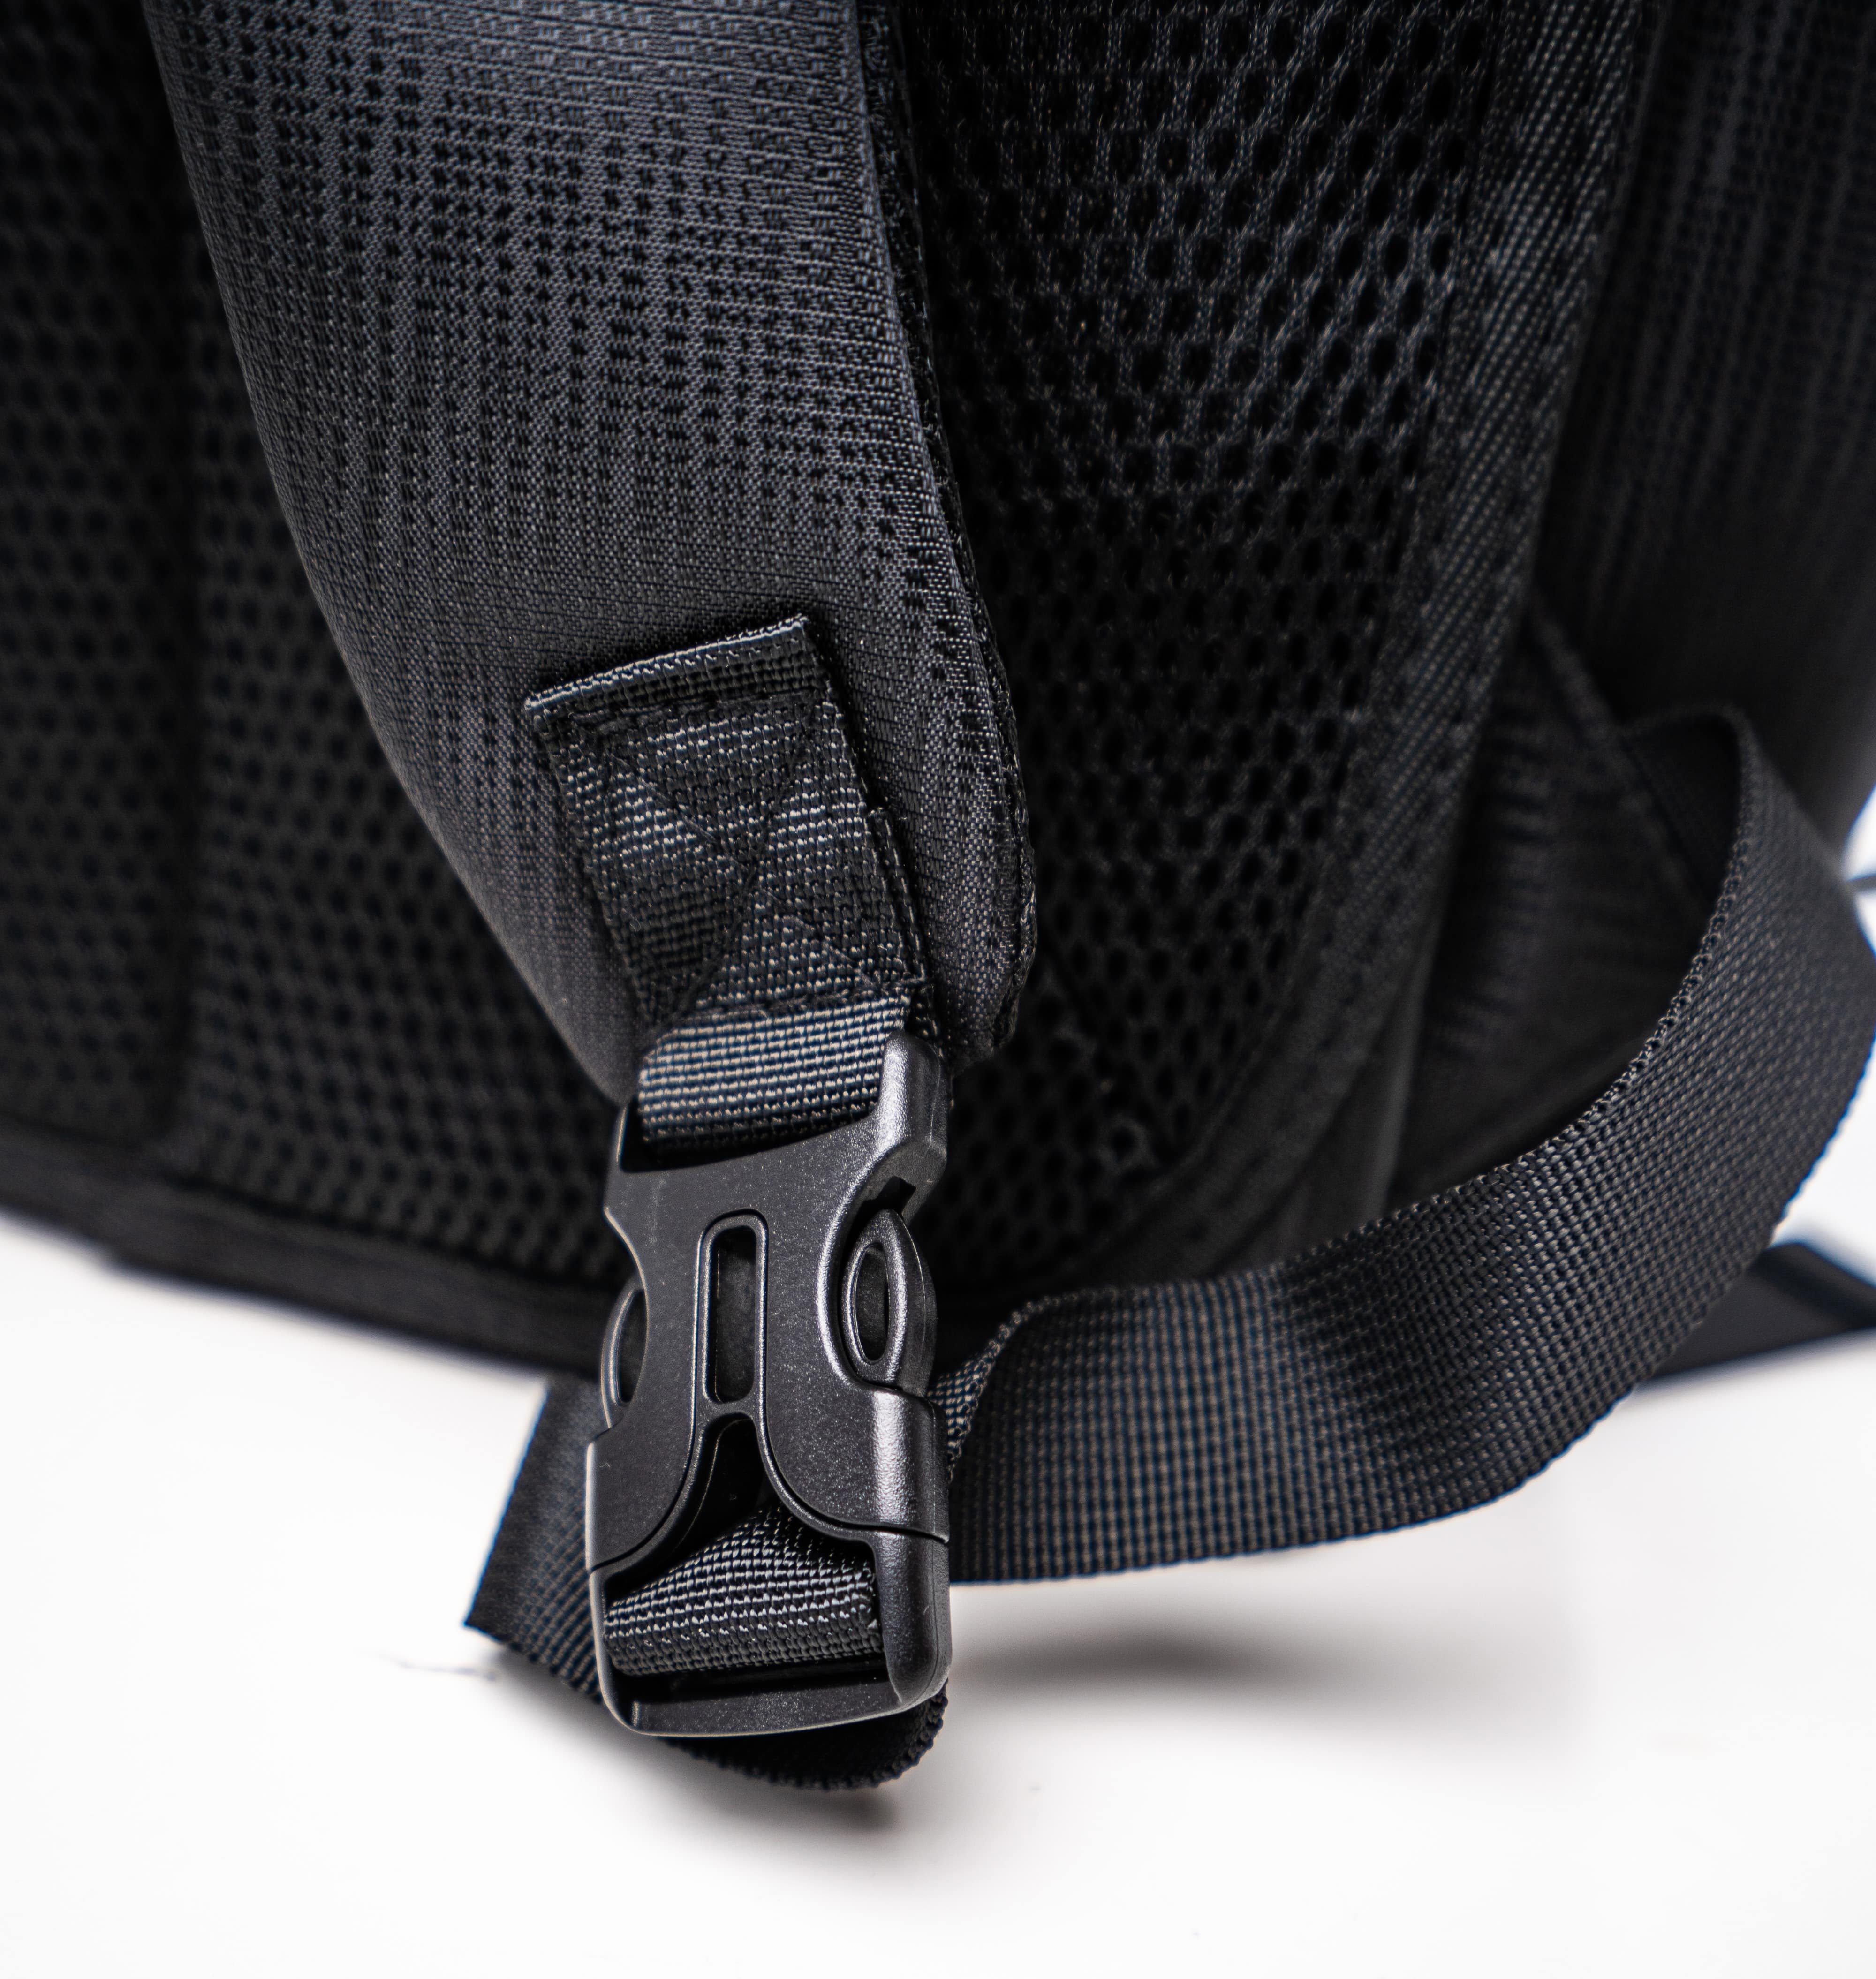 Mount Adams® Yoga Mat Backpack